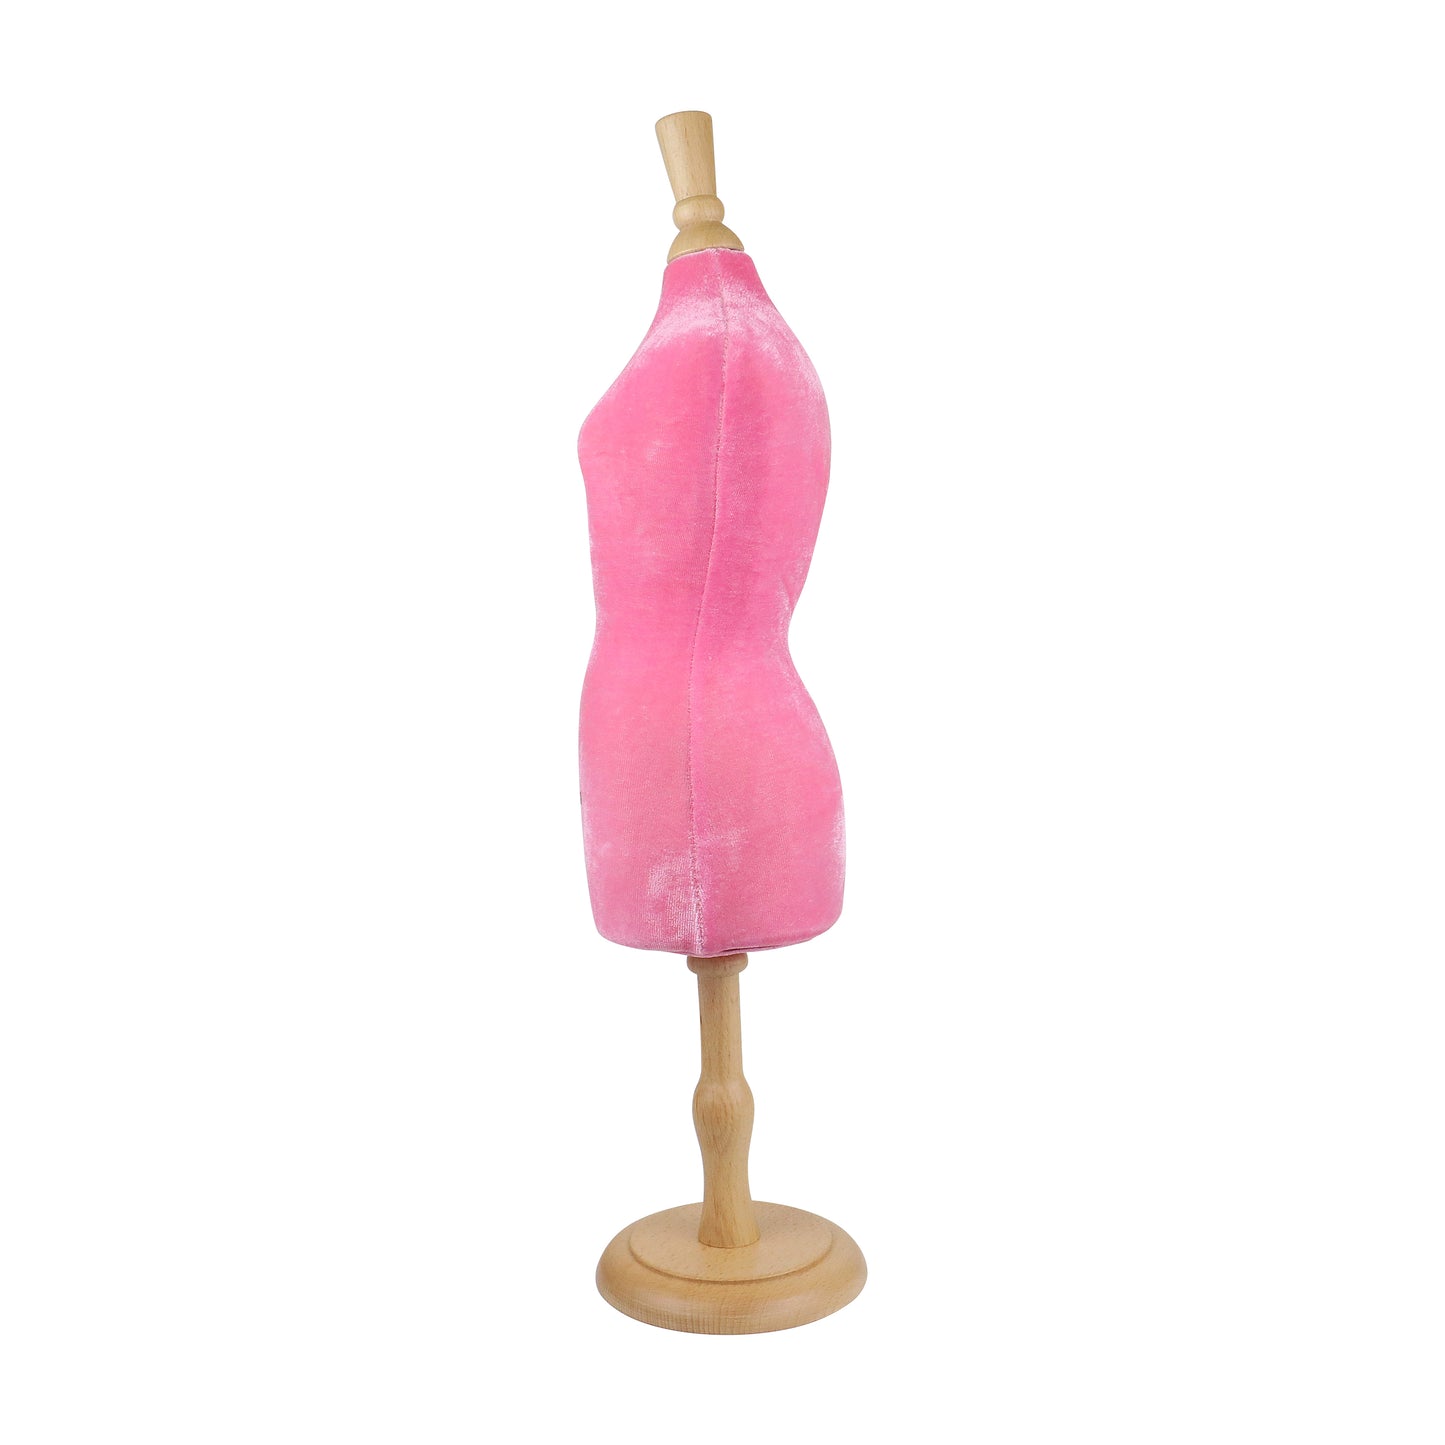 DL802 Dress form,Mini Display mannequin,table window jewelry display props,fully pinnable foam dressmaker dummy